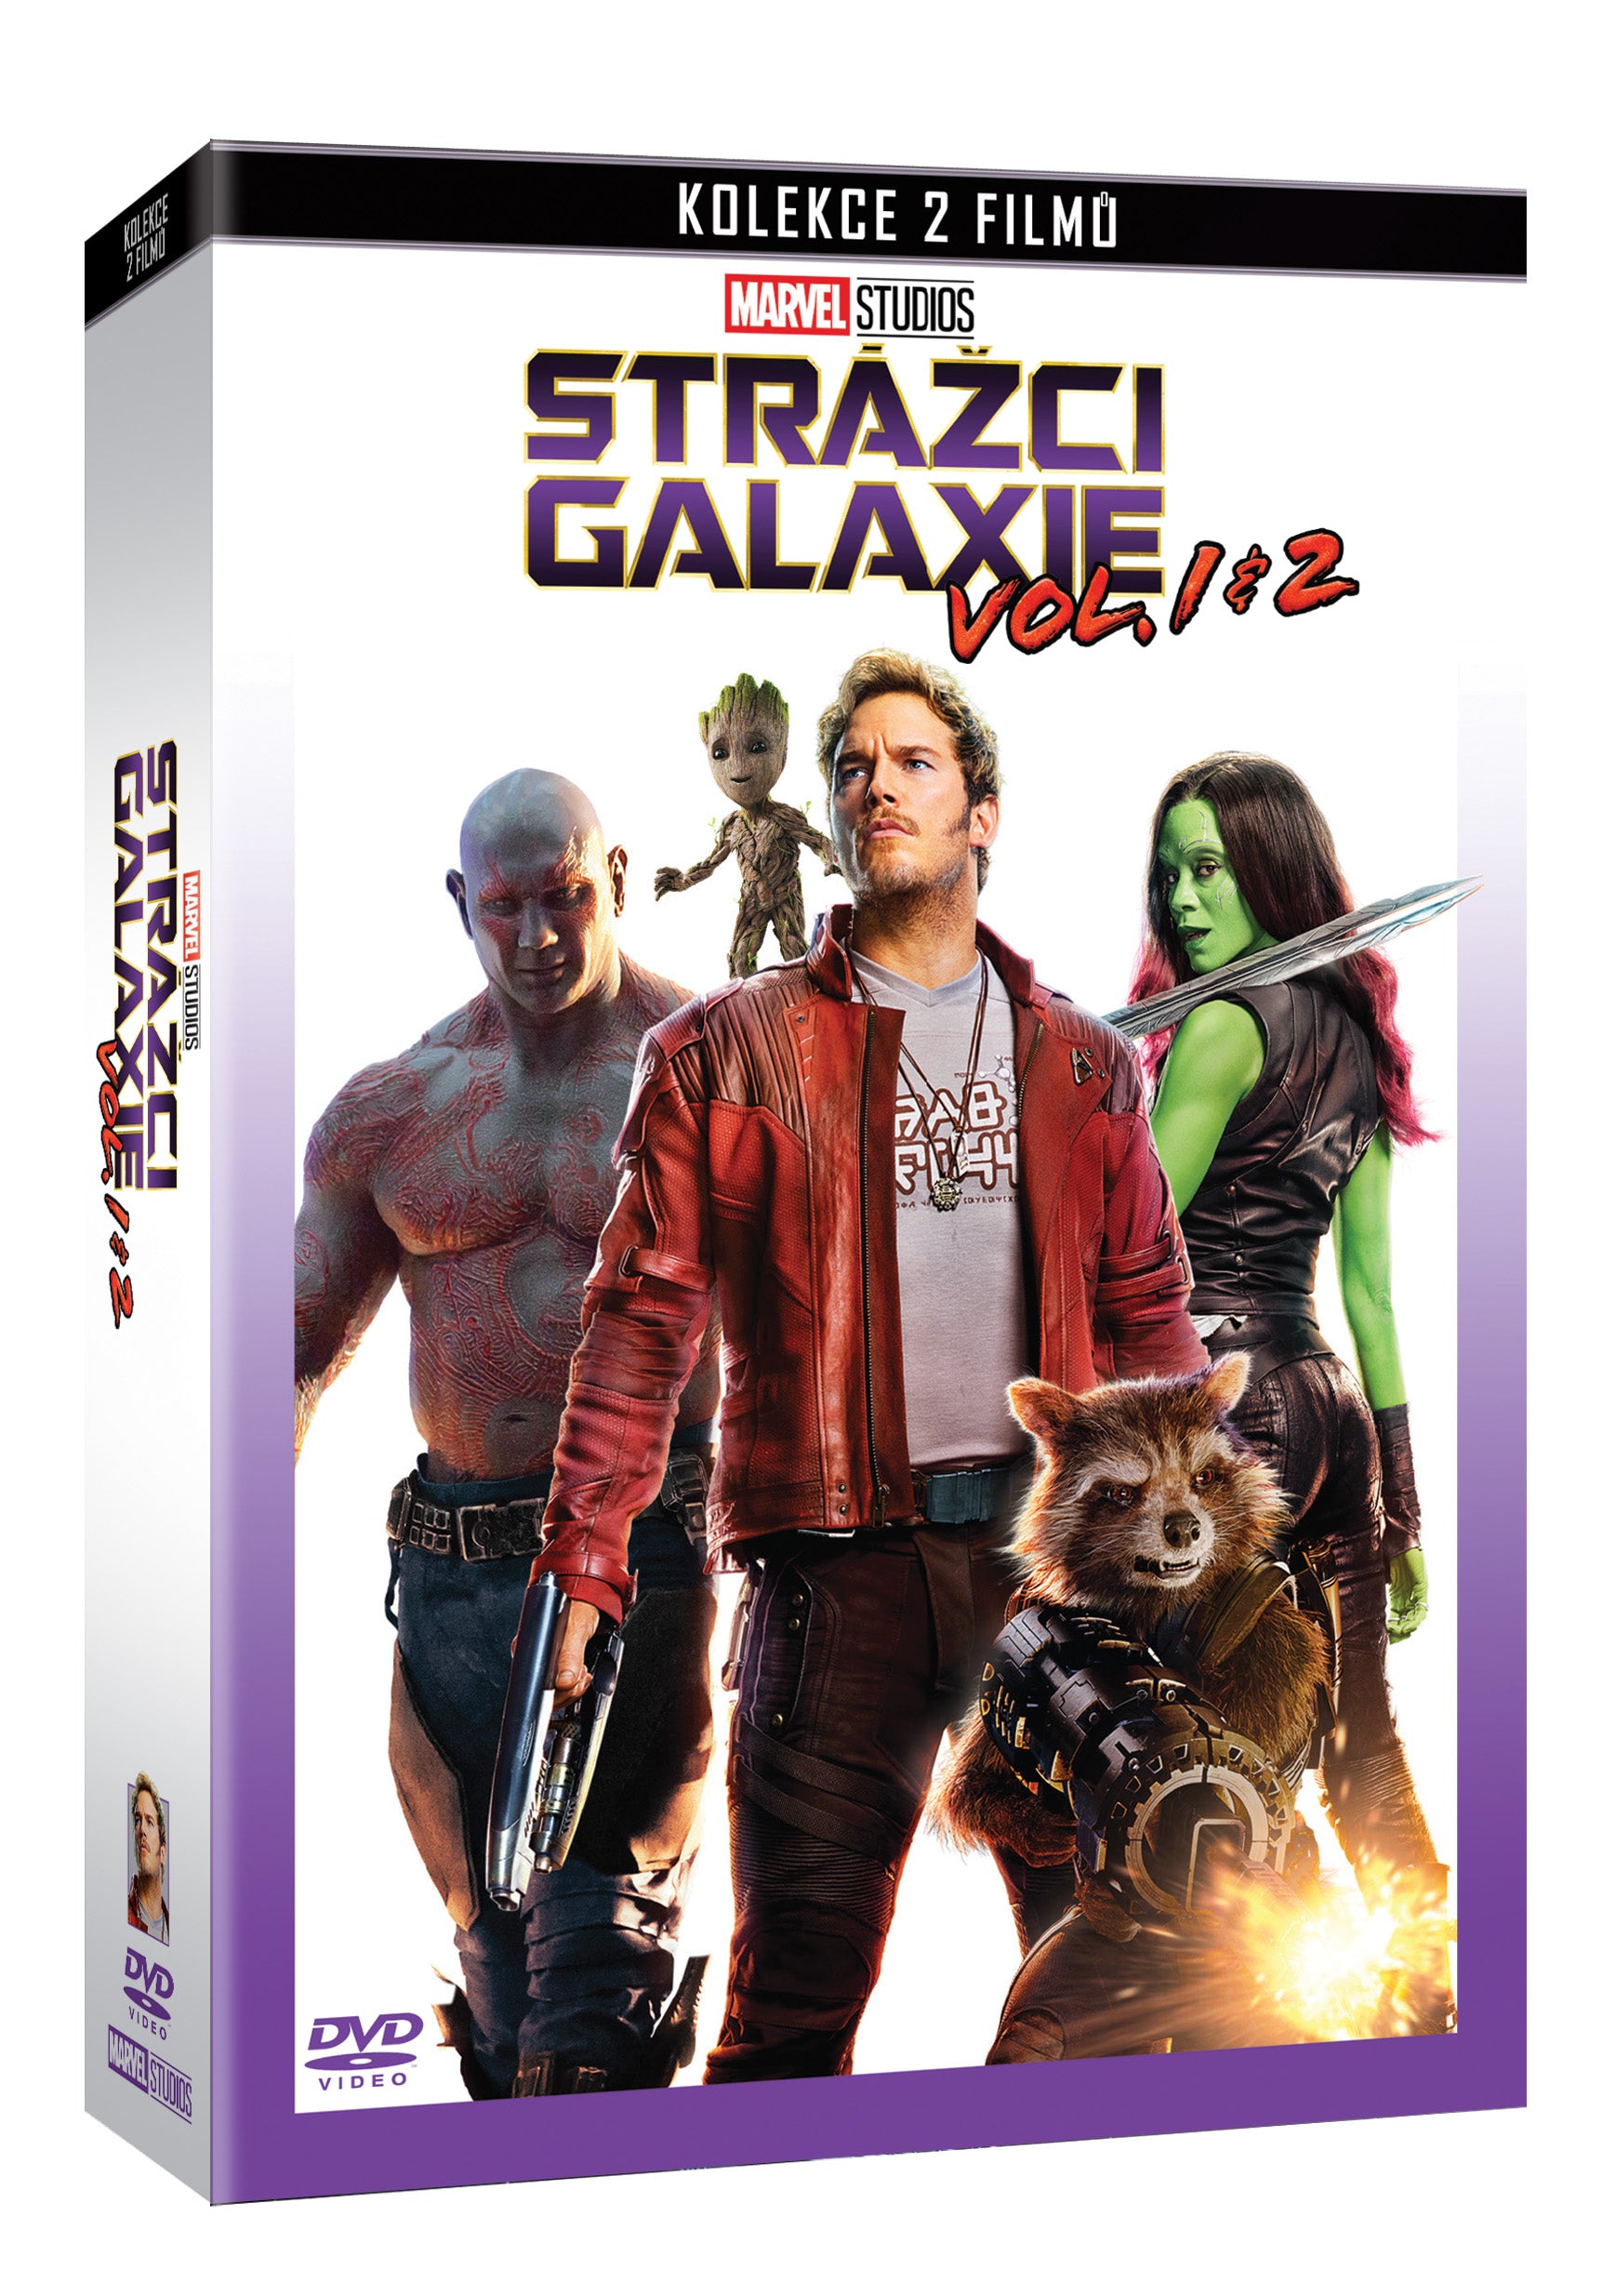 Strazci Galaxie + Strazci Galaxie Vol. 2 2DVD / Guardians of the Galaxy + Guardians of the Galaxy Vol. 2